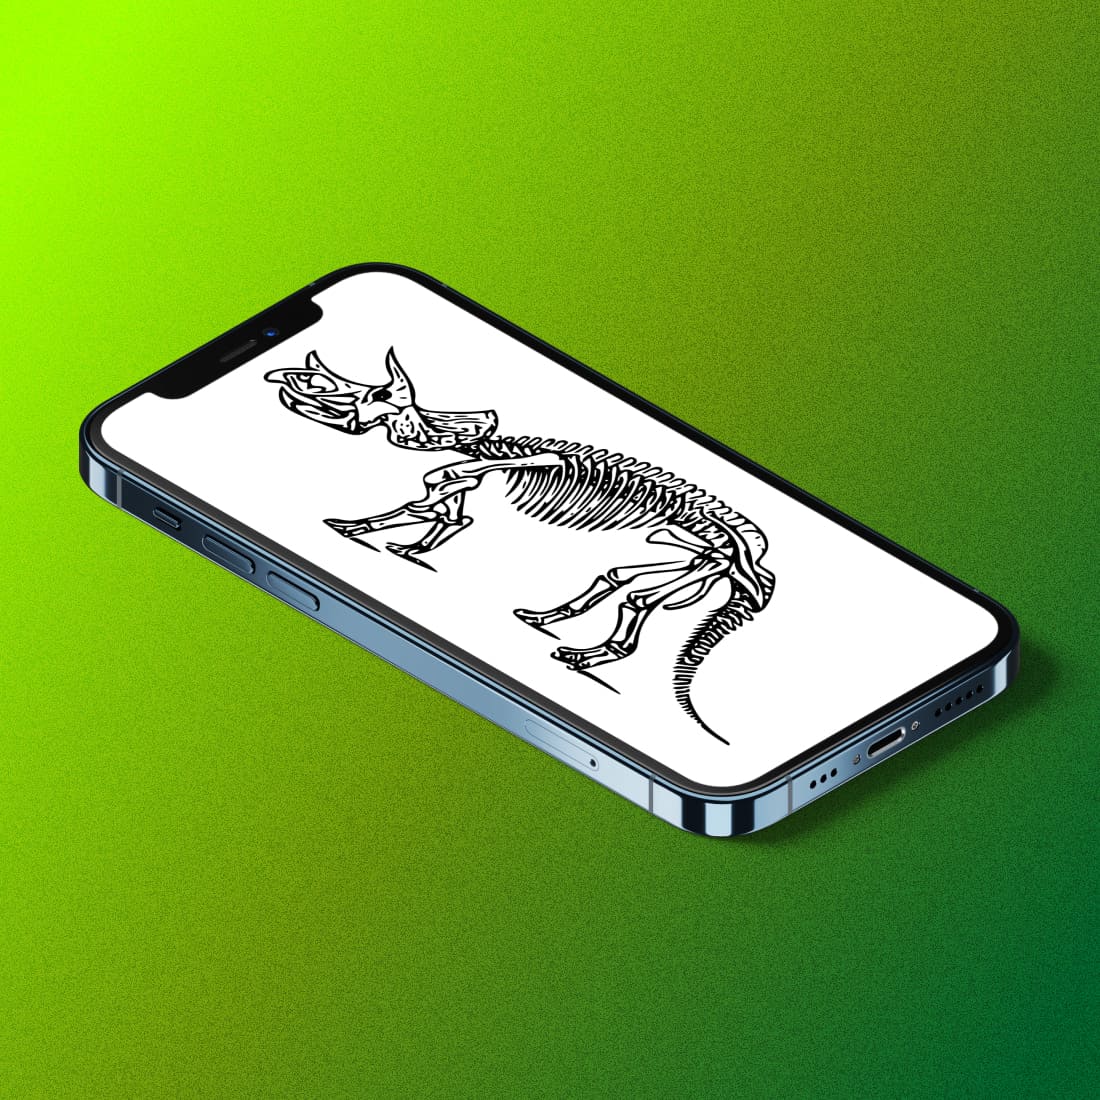 Dinosaur Triceratops Fossil on Phone Lockscreen.